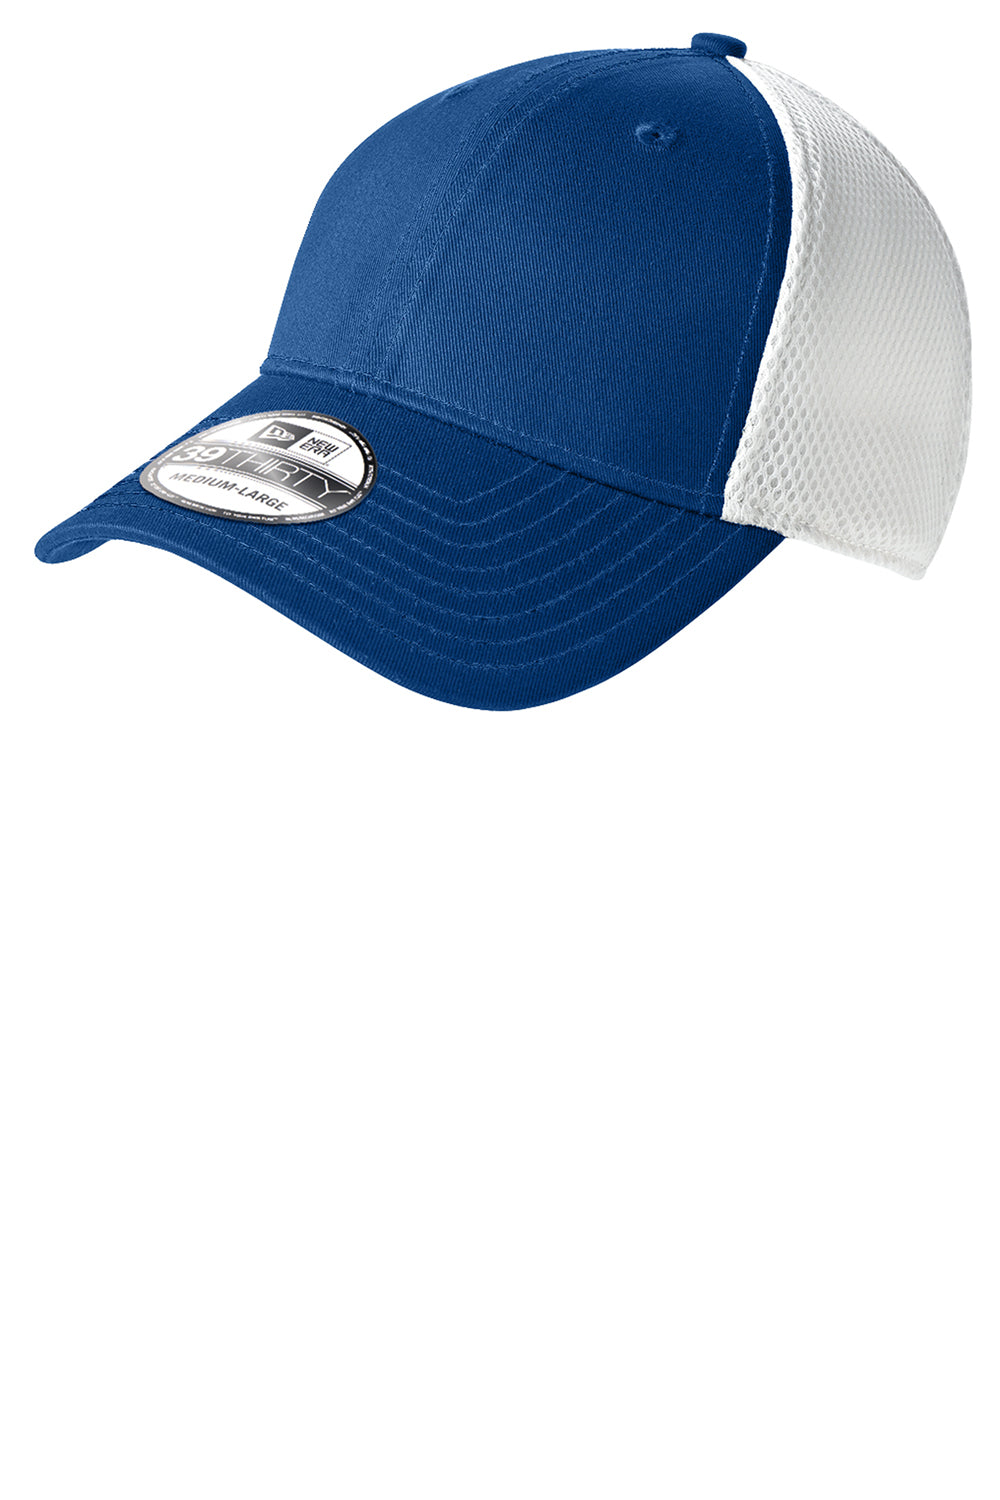 New Era NE1020 Mens Stretch Fit Hat Royal Blue/White Front